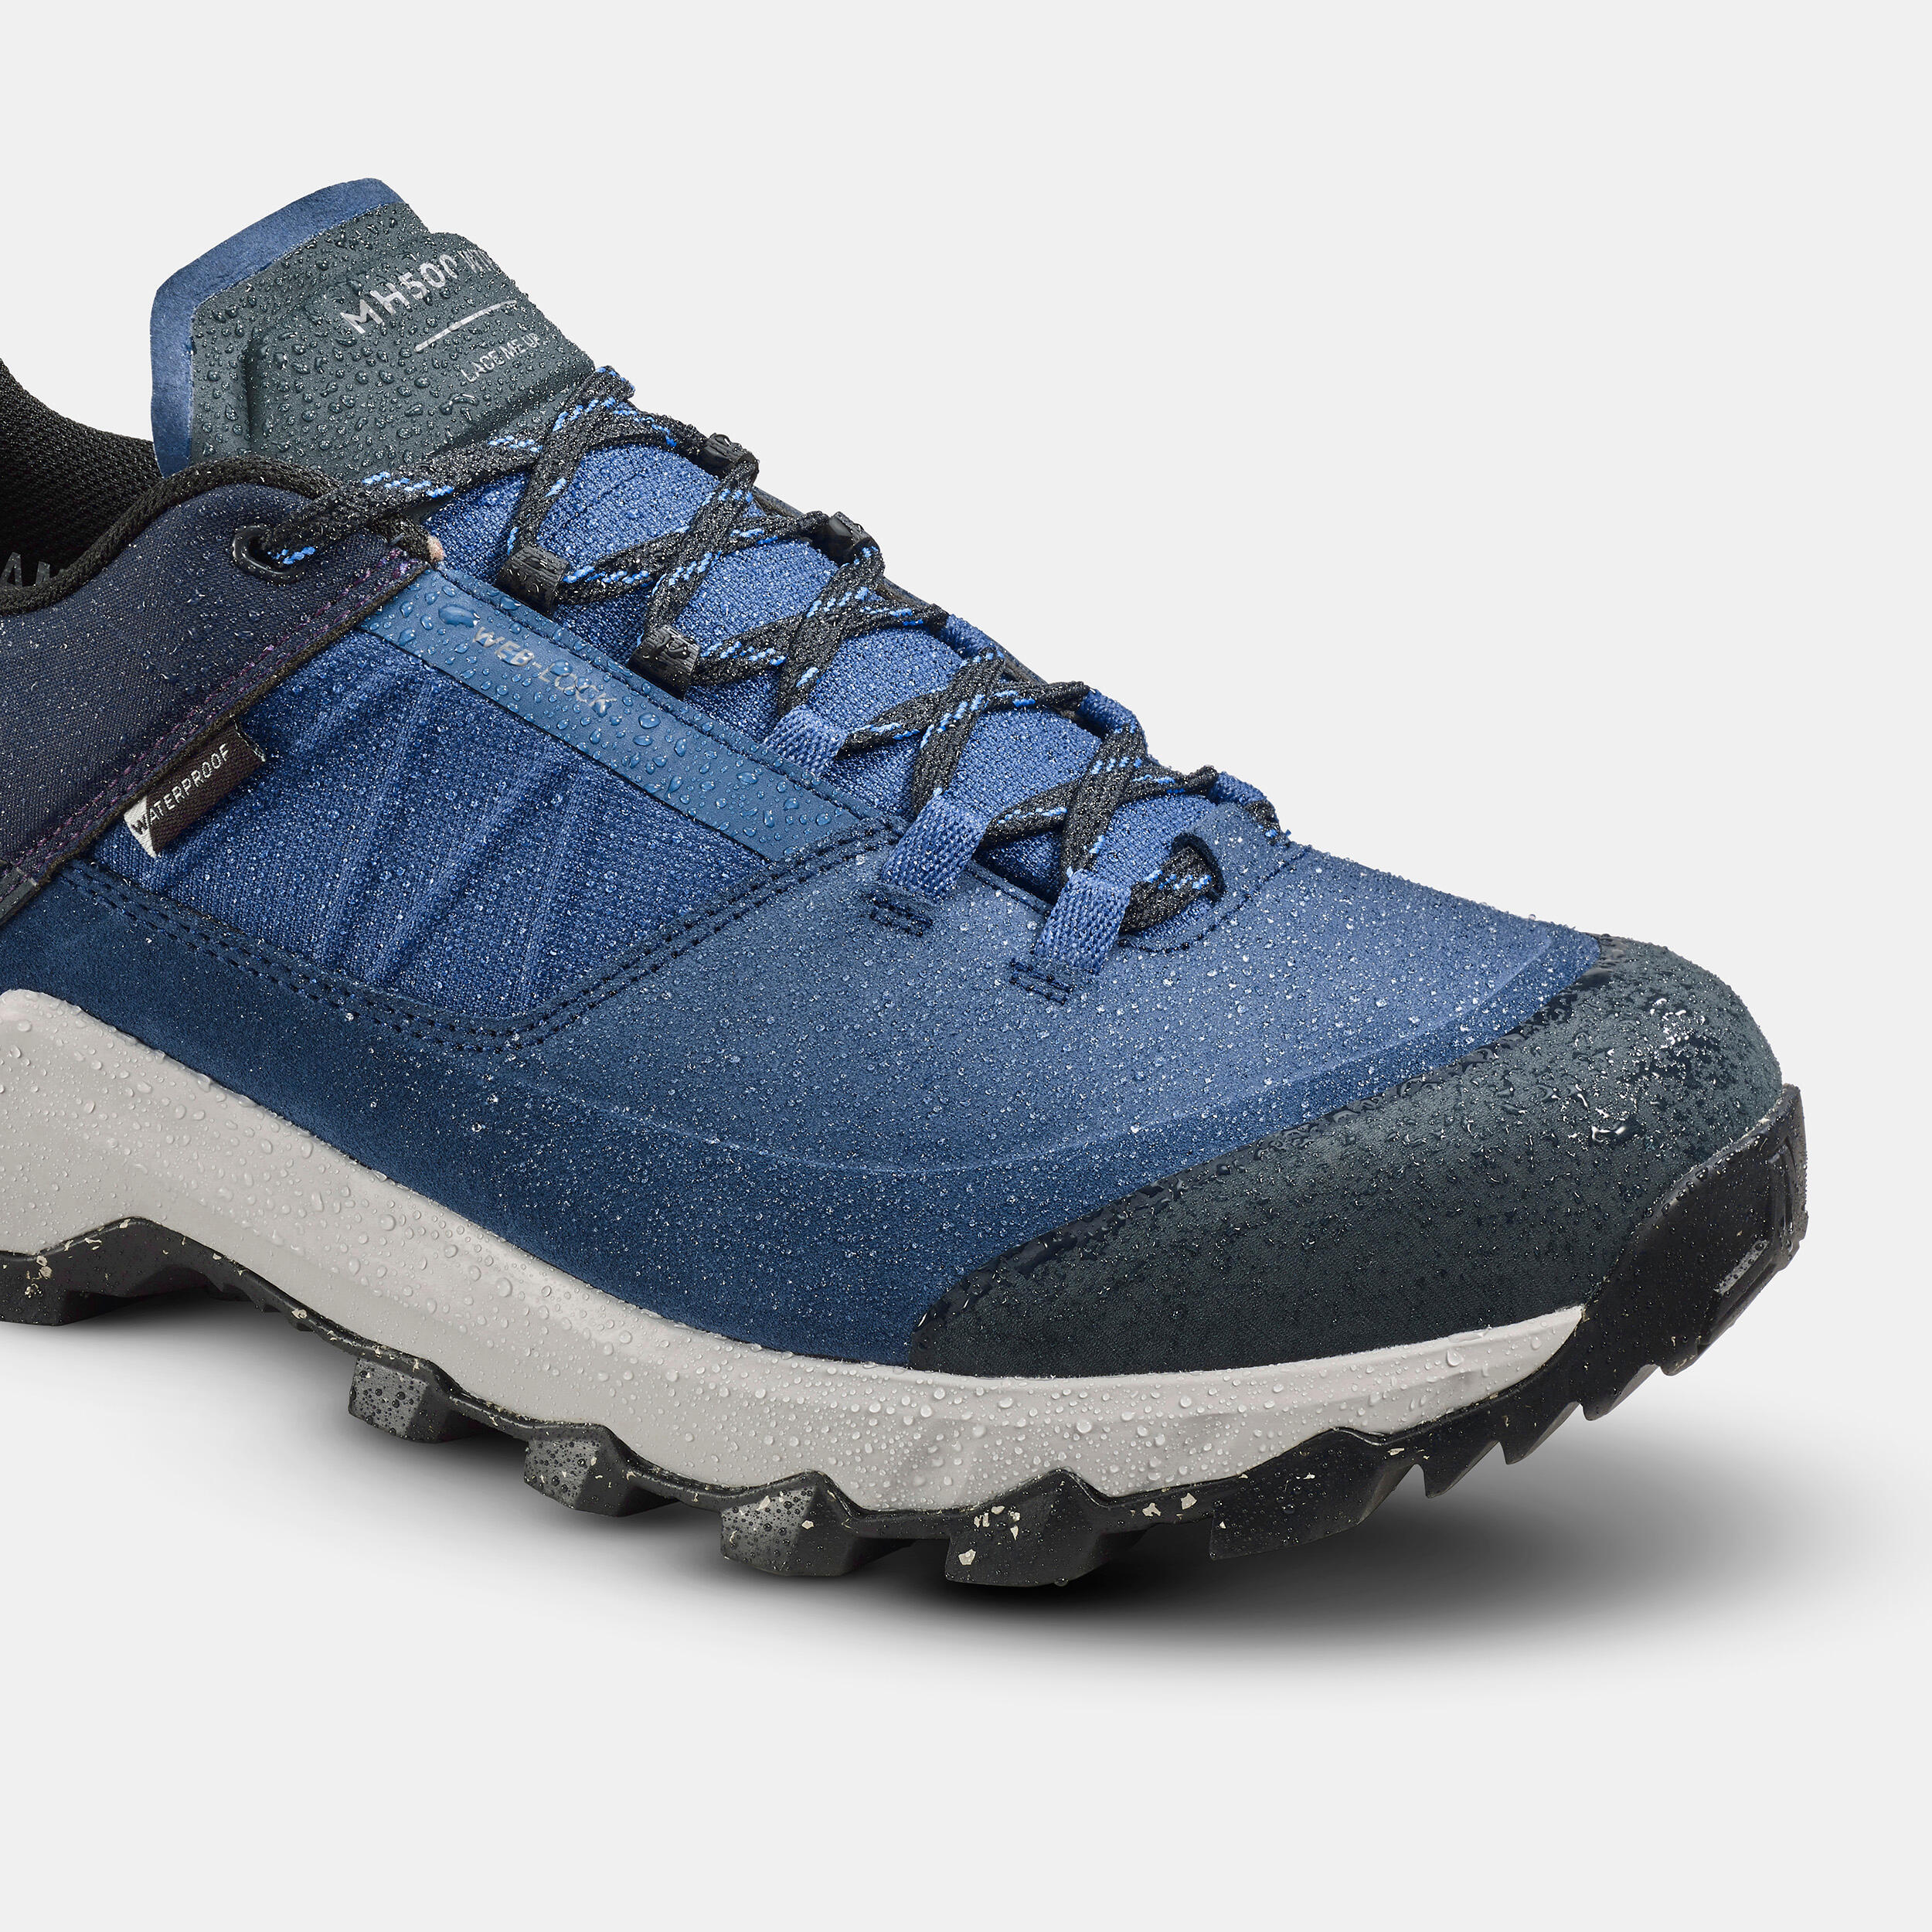 Men's waterproof hiking shoes - MH500 blue 4/10